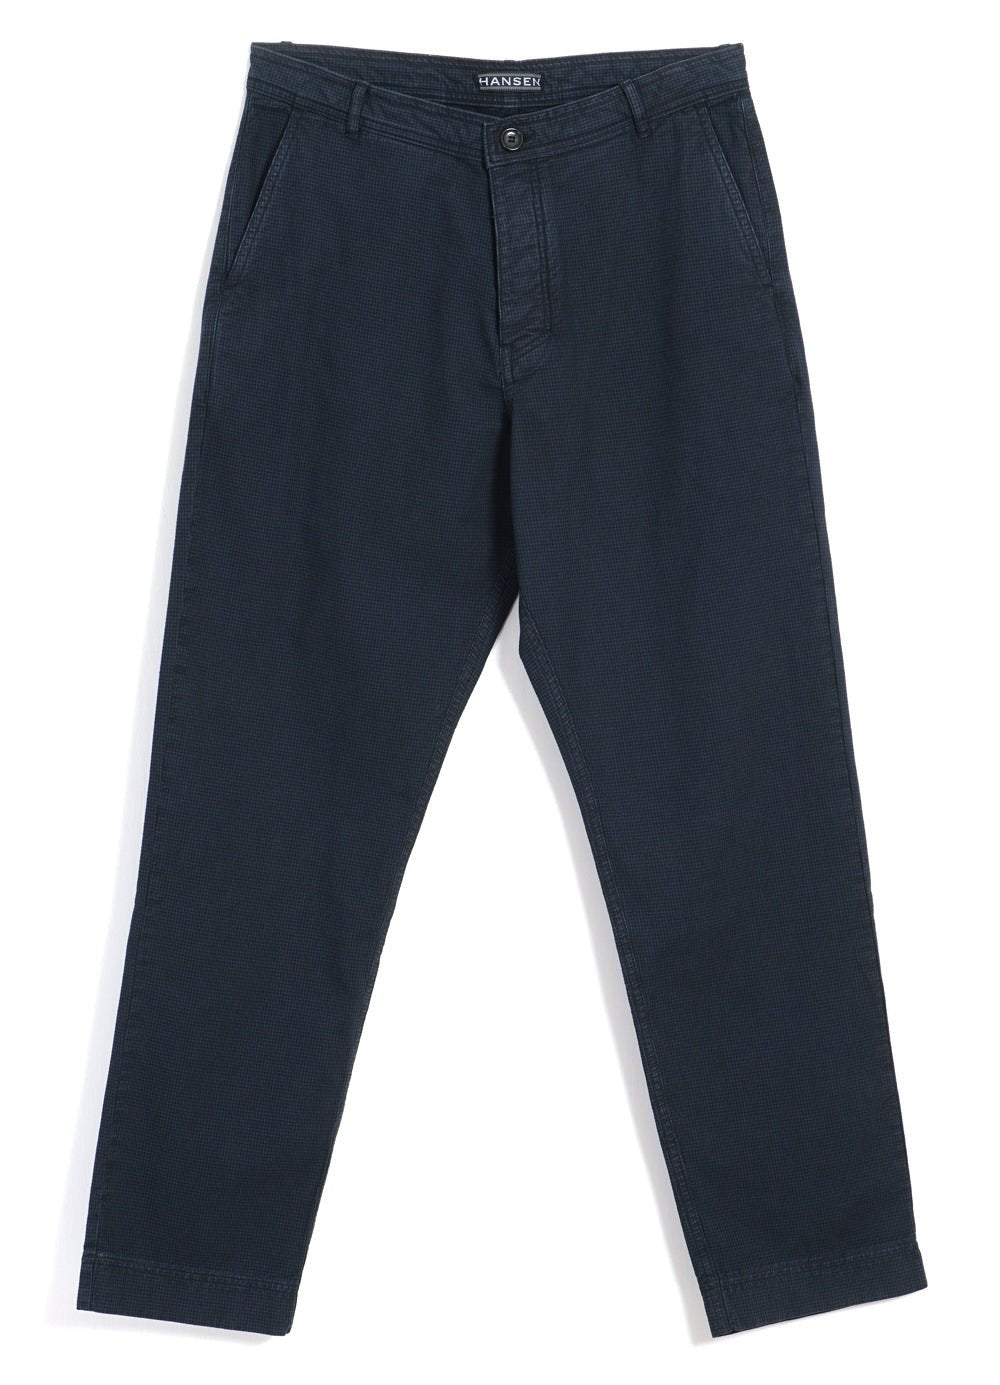 HANSEN GARMENTS - KEN | Wide Cut Work Trousers | Black Navy - HANSEN Garments